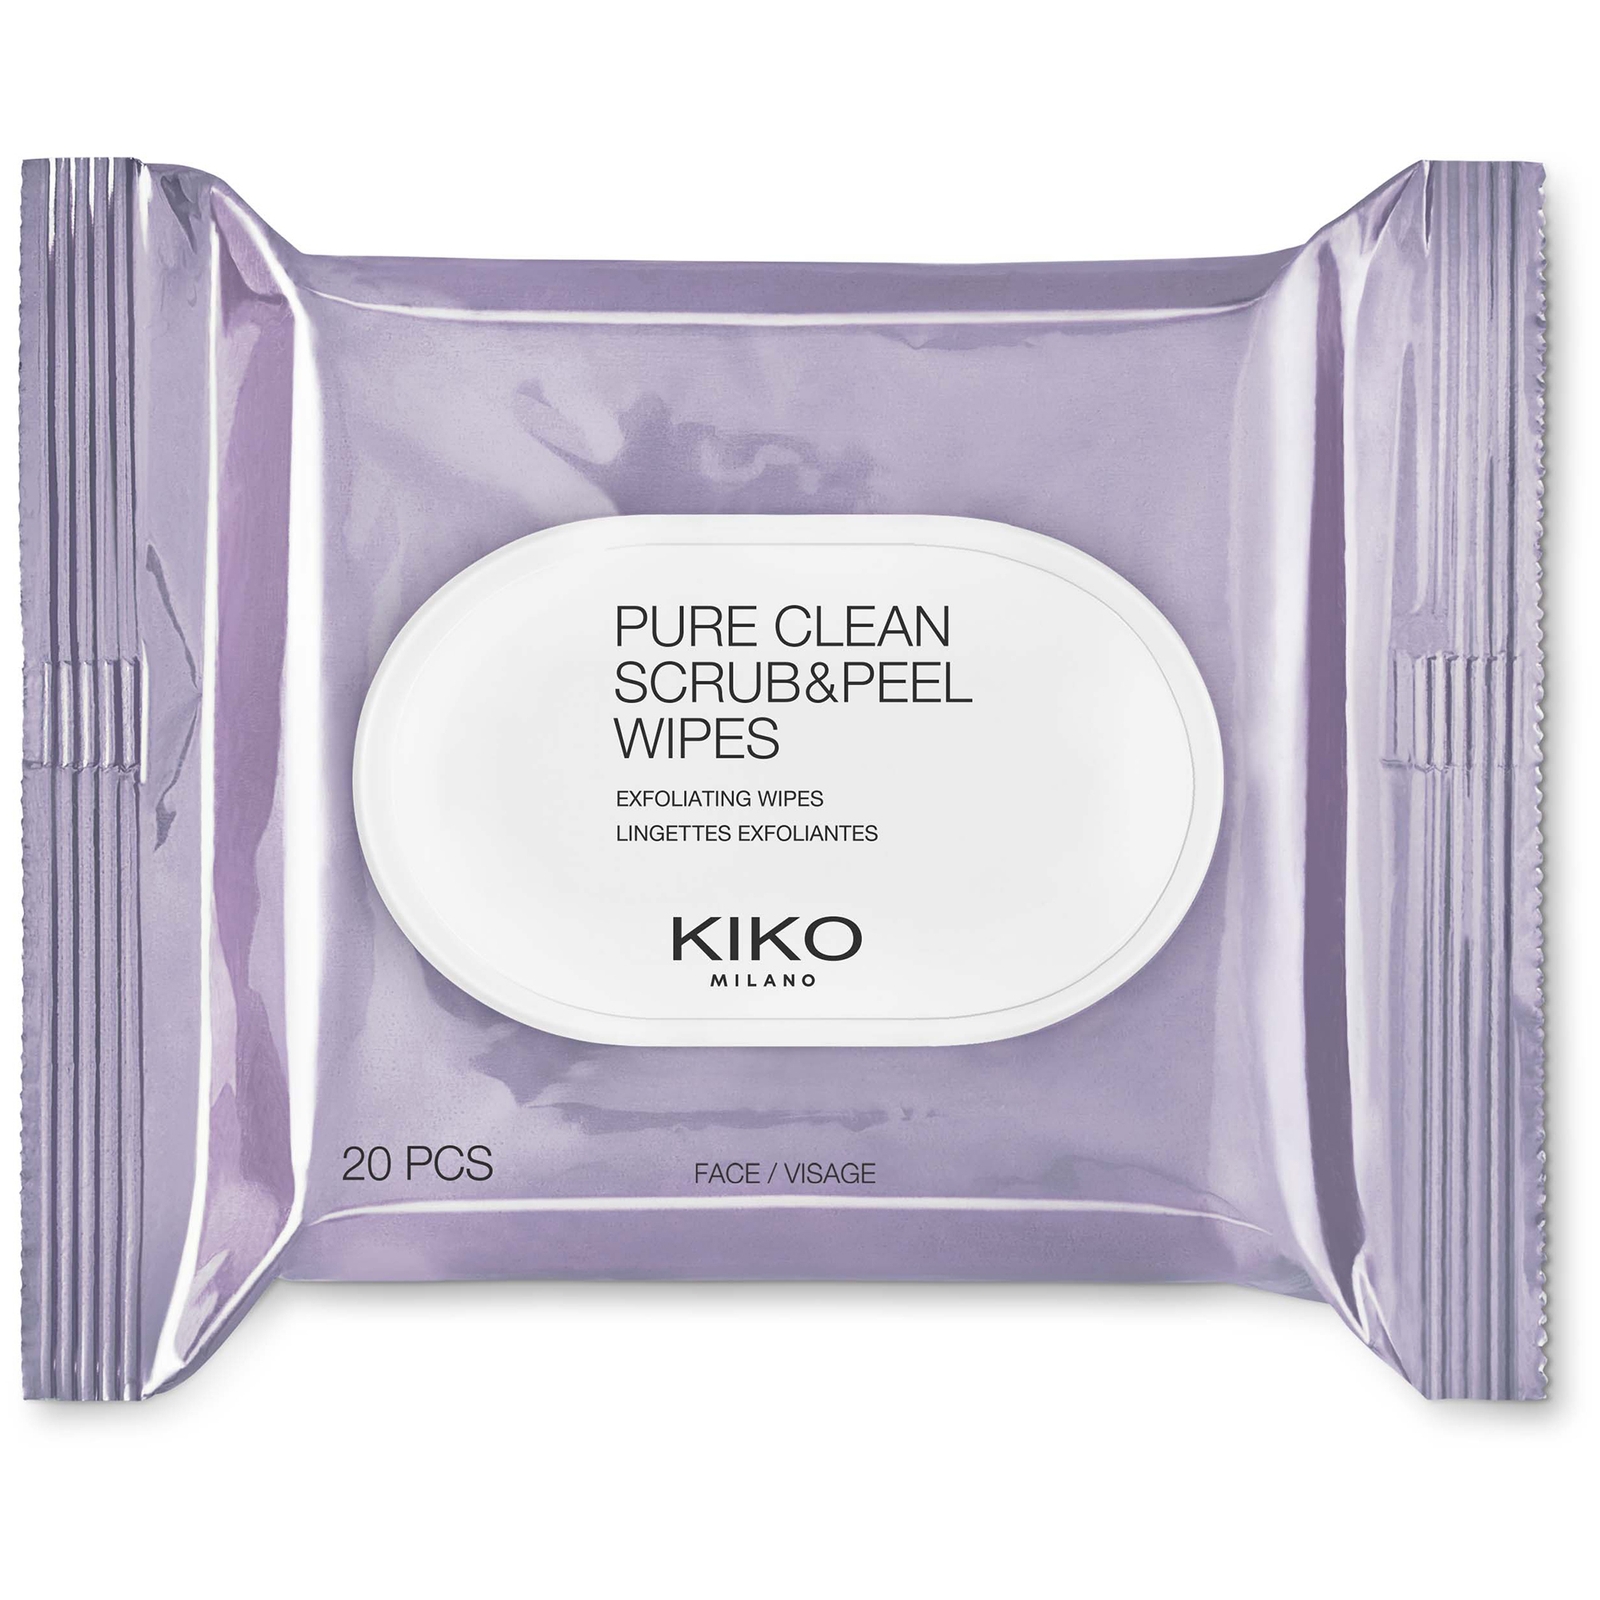 Image of KIKO Milano Pure Clean Scrub & Peel Wipes